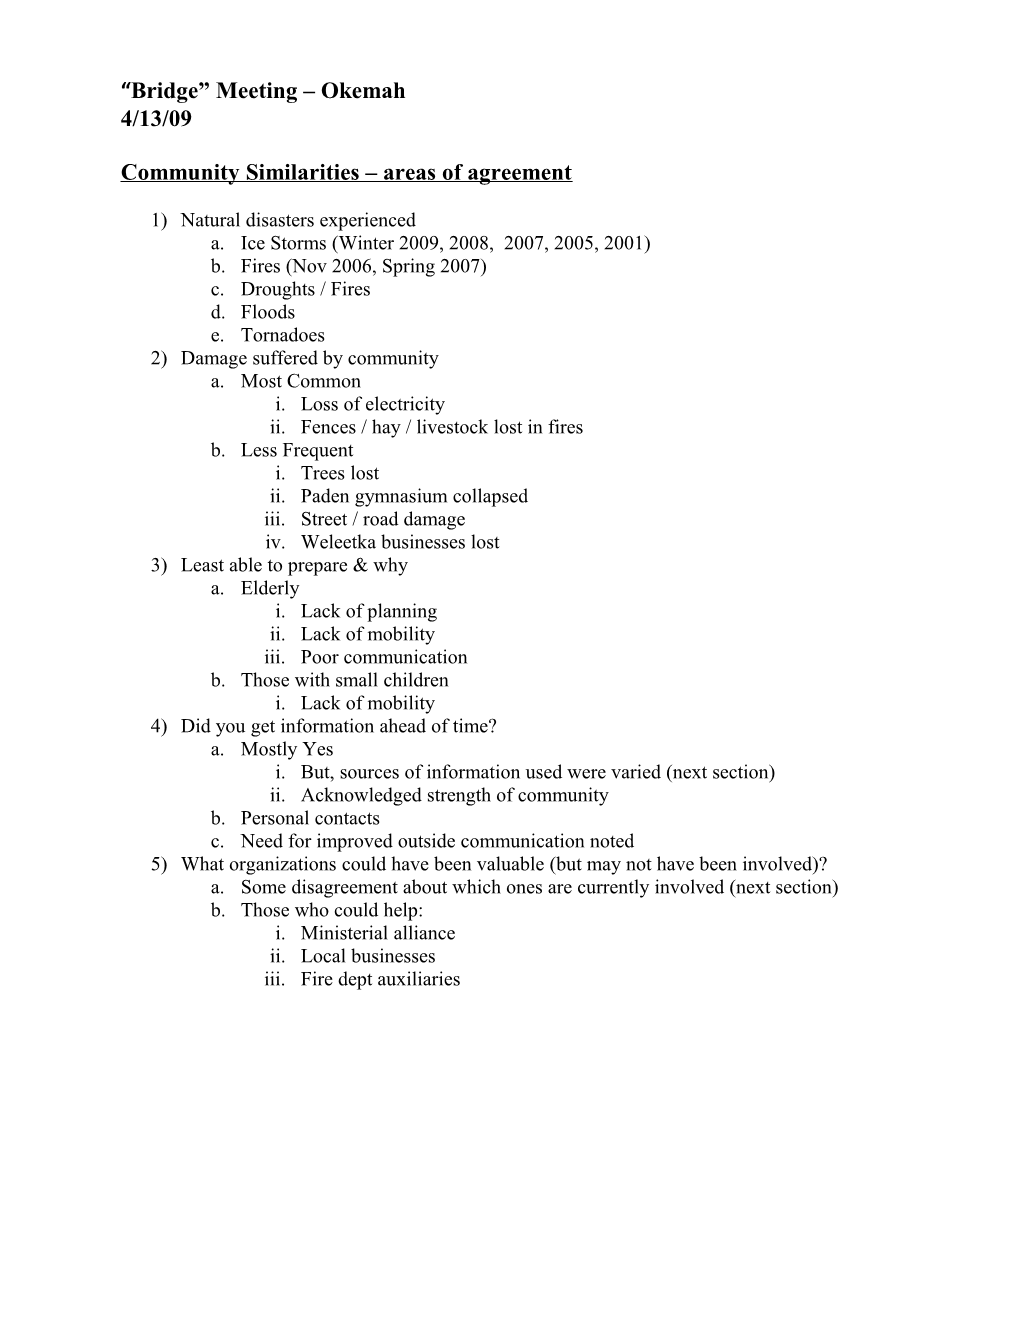 Community Similarities Areas of Agreement